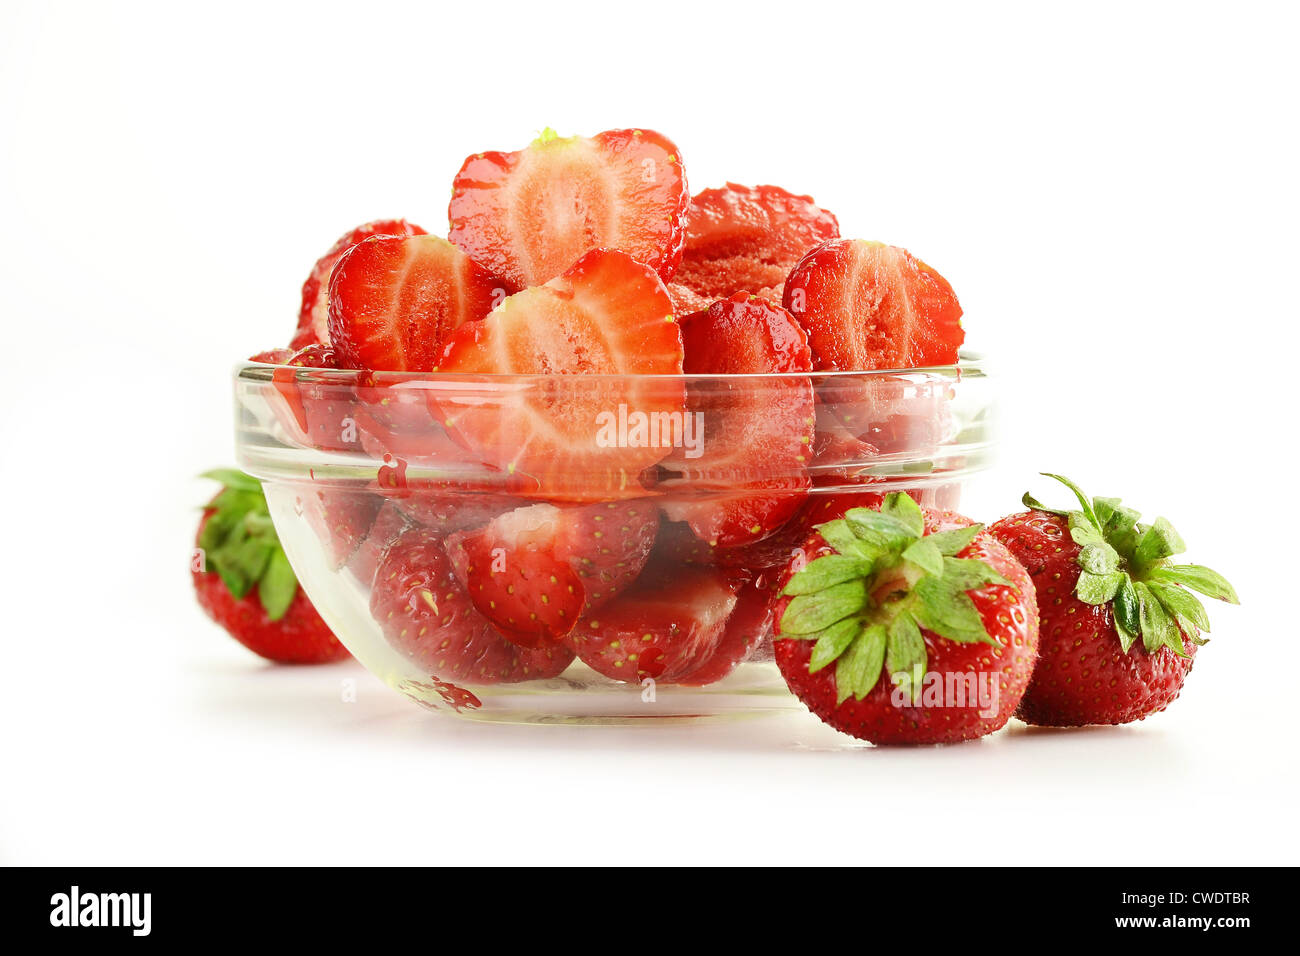 Kitchen dish with fresh strawberries Stock Photo